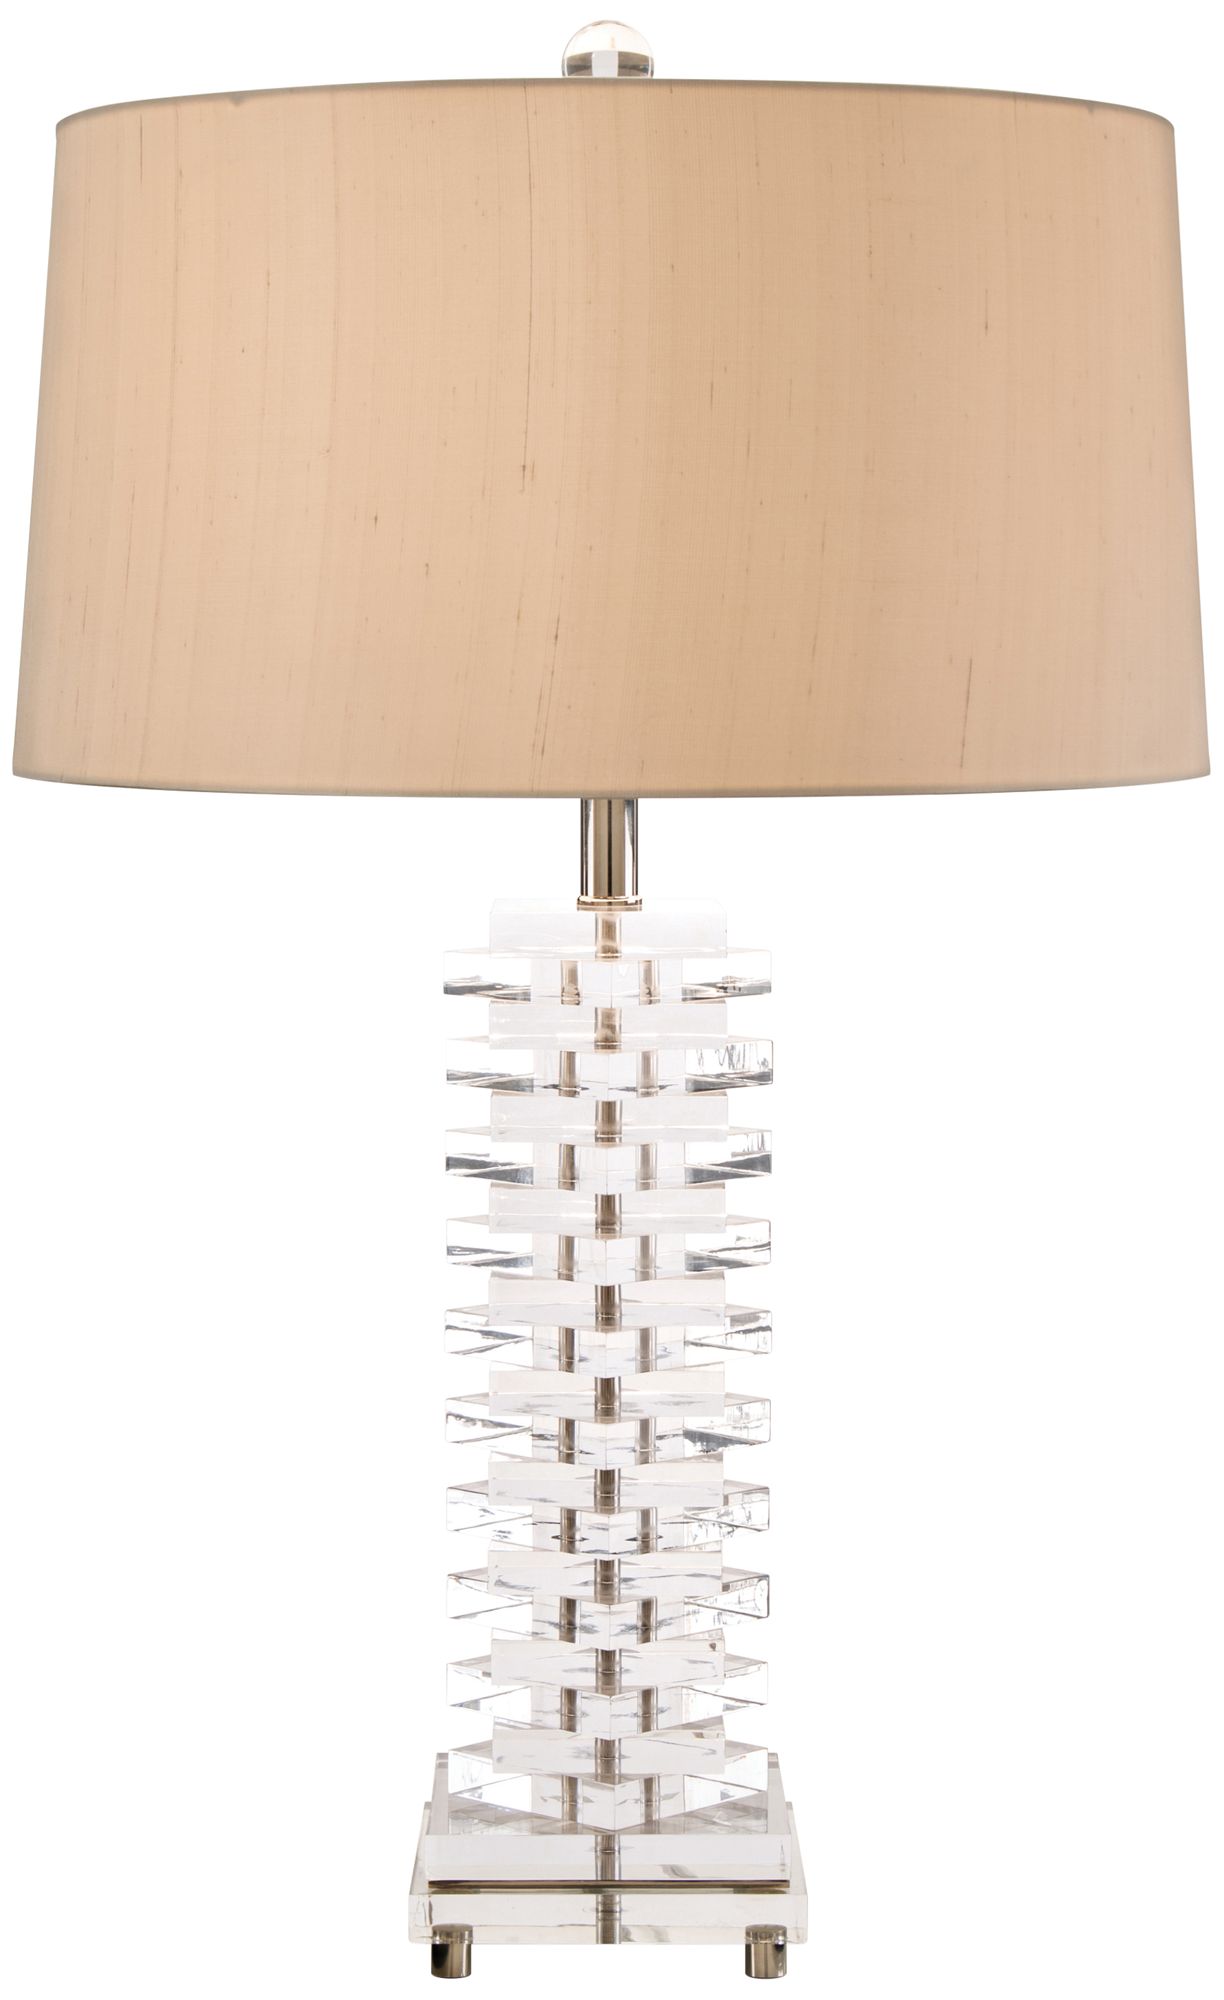 acrylic table lamps